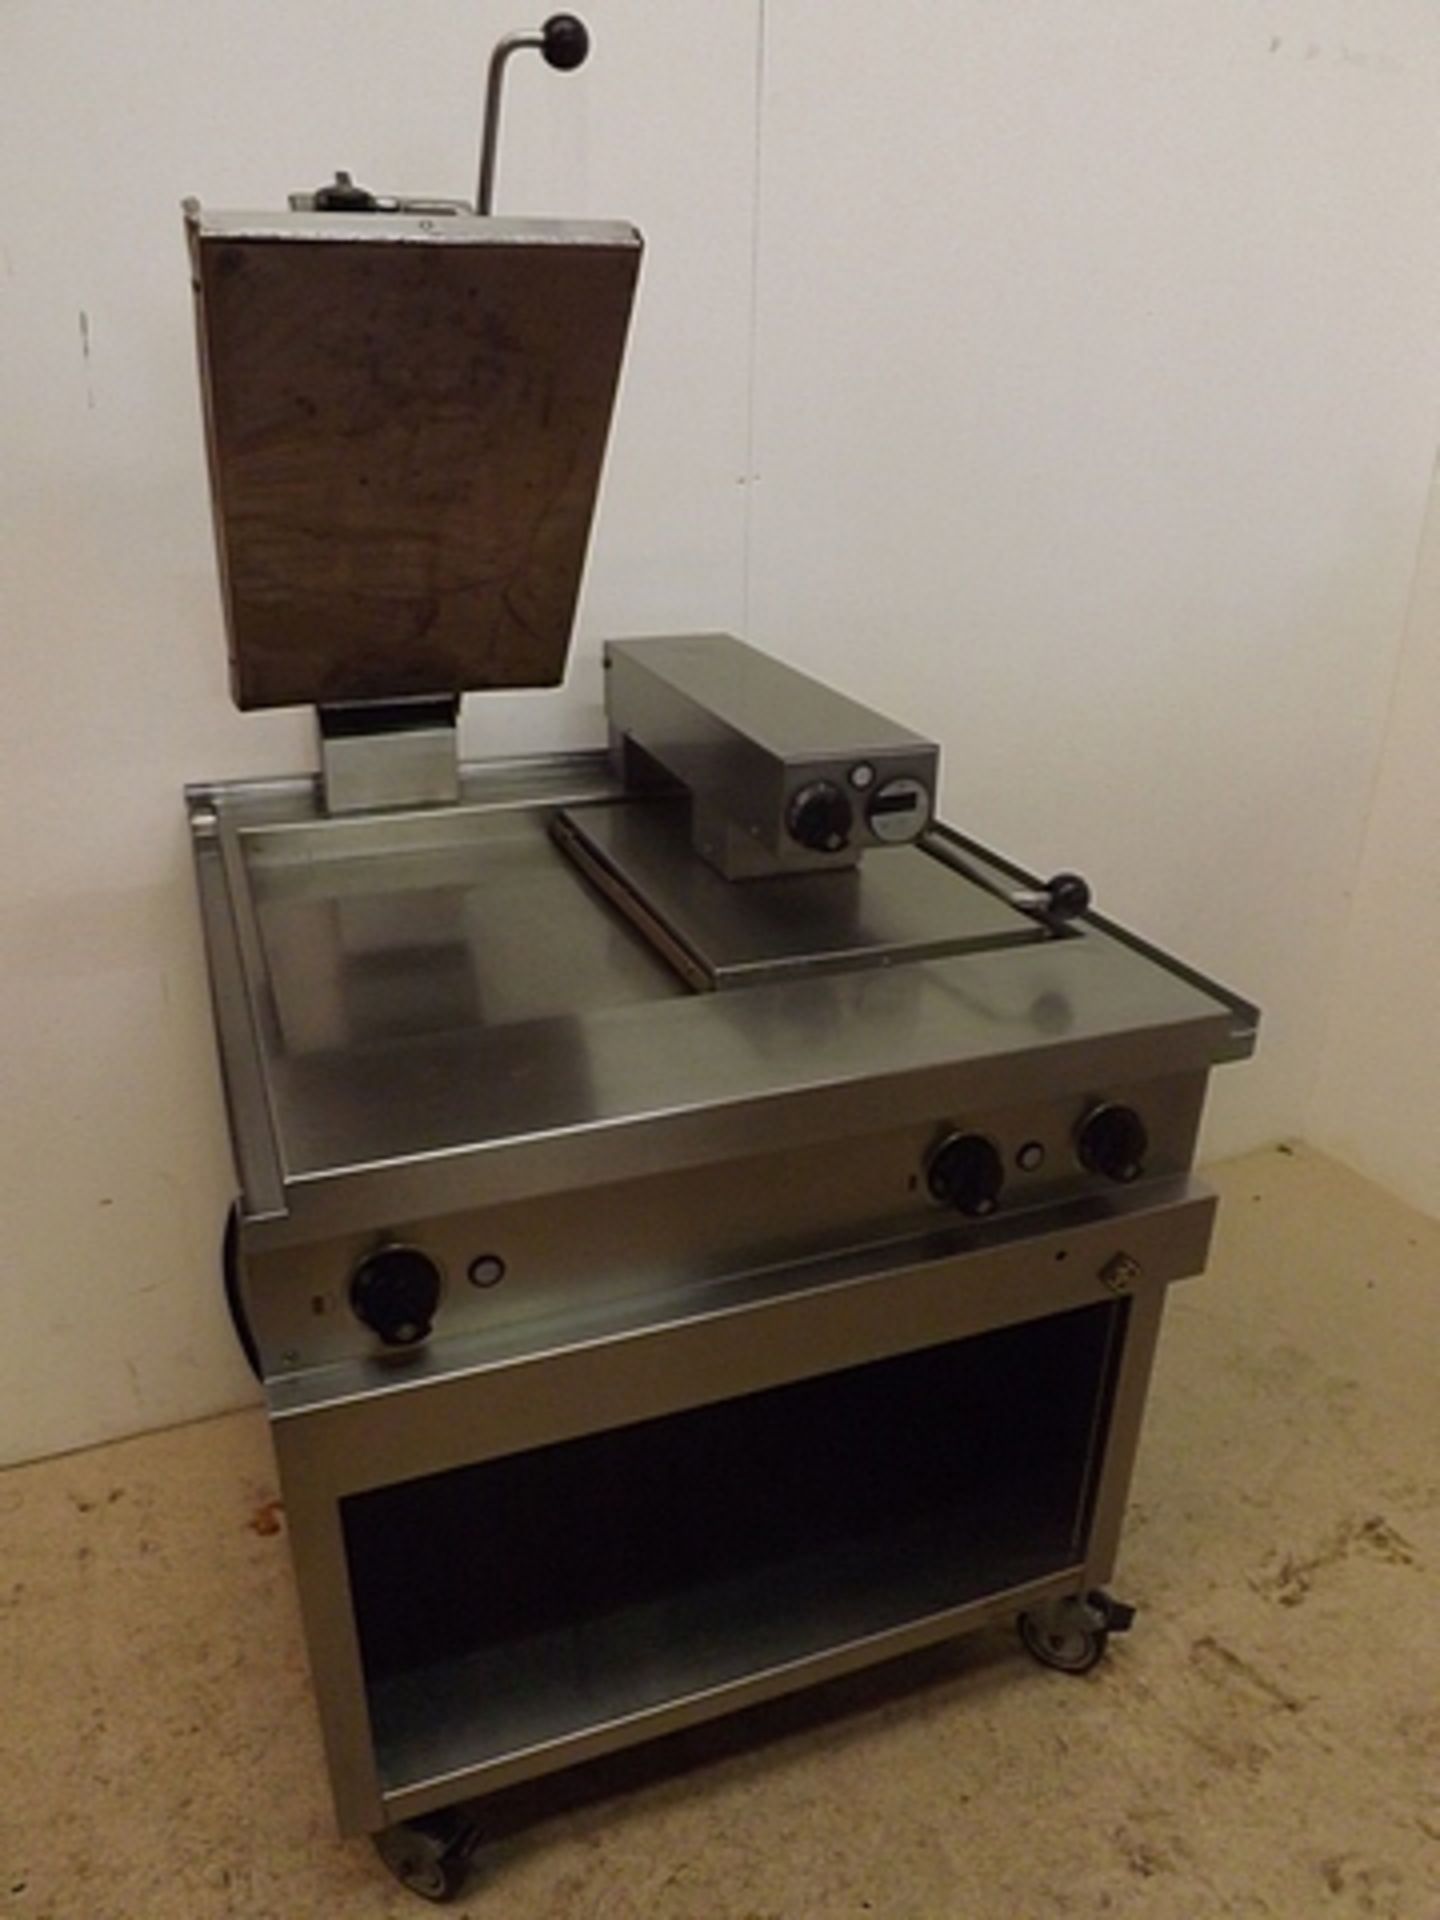 MKN Optima 850 electric clam char-grill precise thermostatic temperature control for consistent